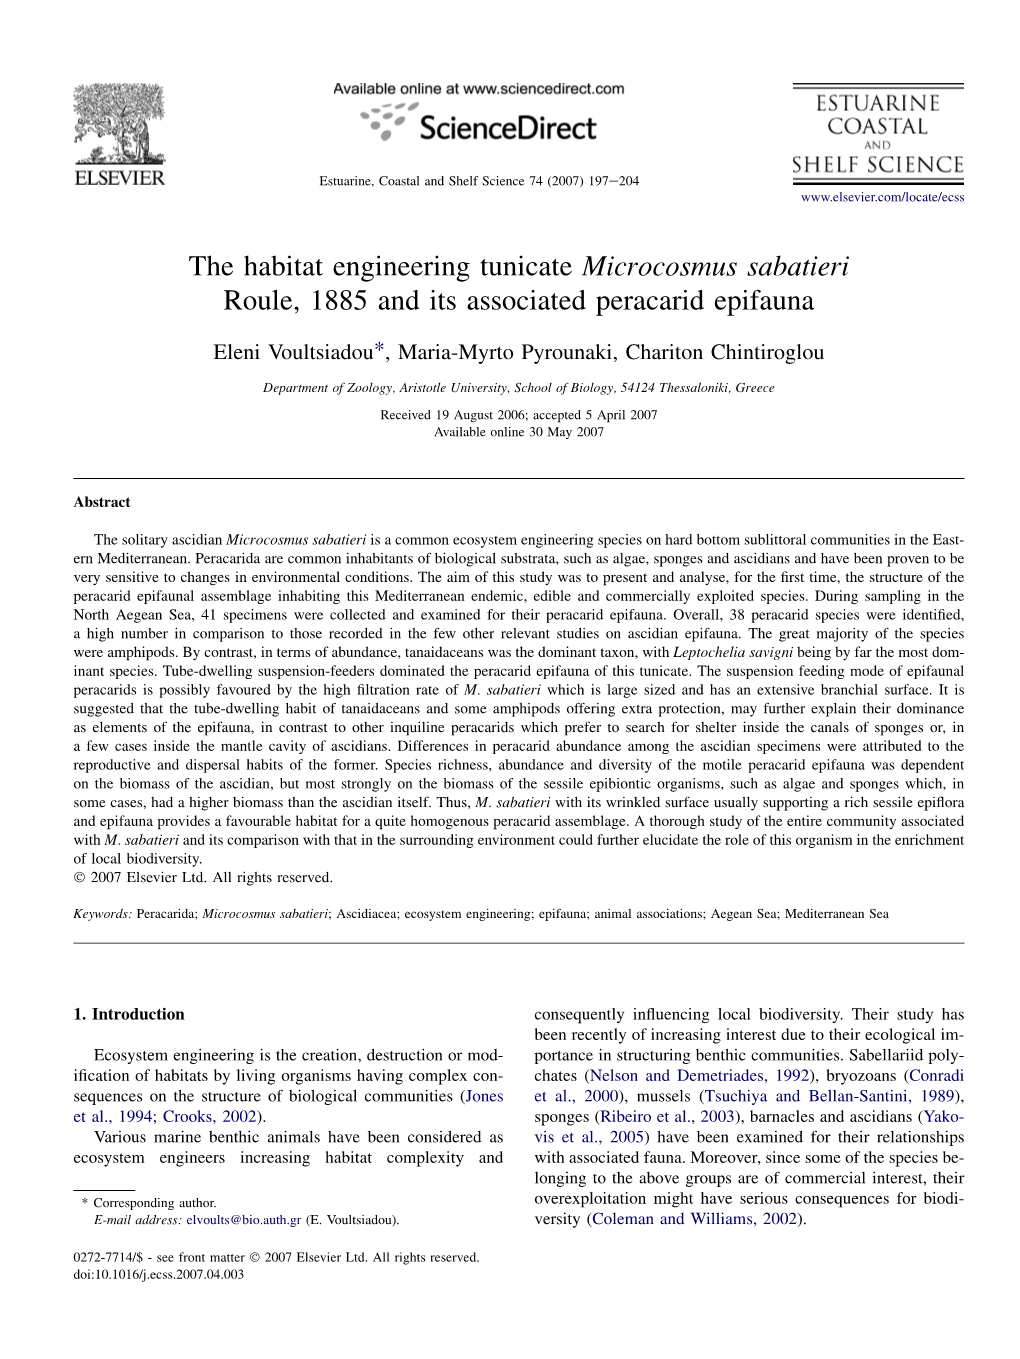 The Habitat Engineering Tunicate Microcosmus Sabatieri Roule, 1885 and Its Associated Peracarid Epifauna